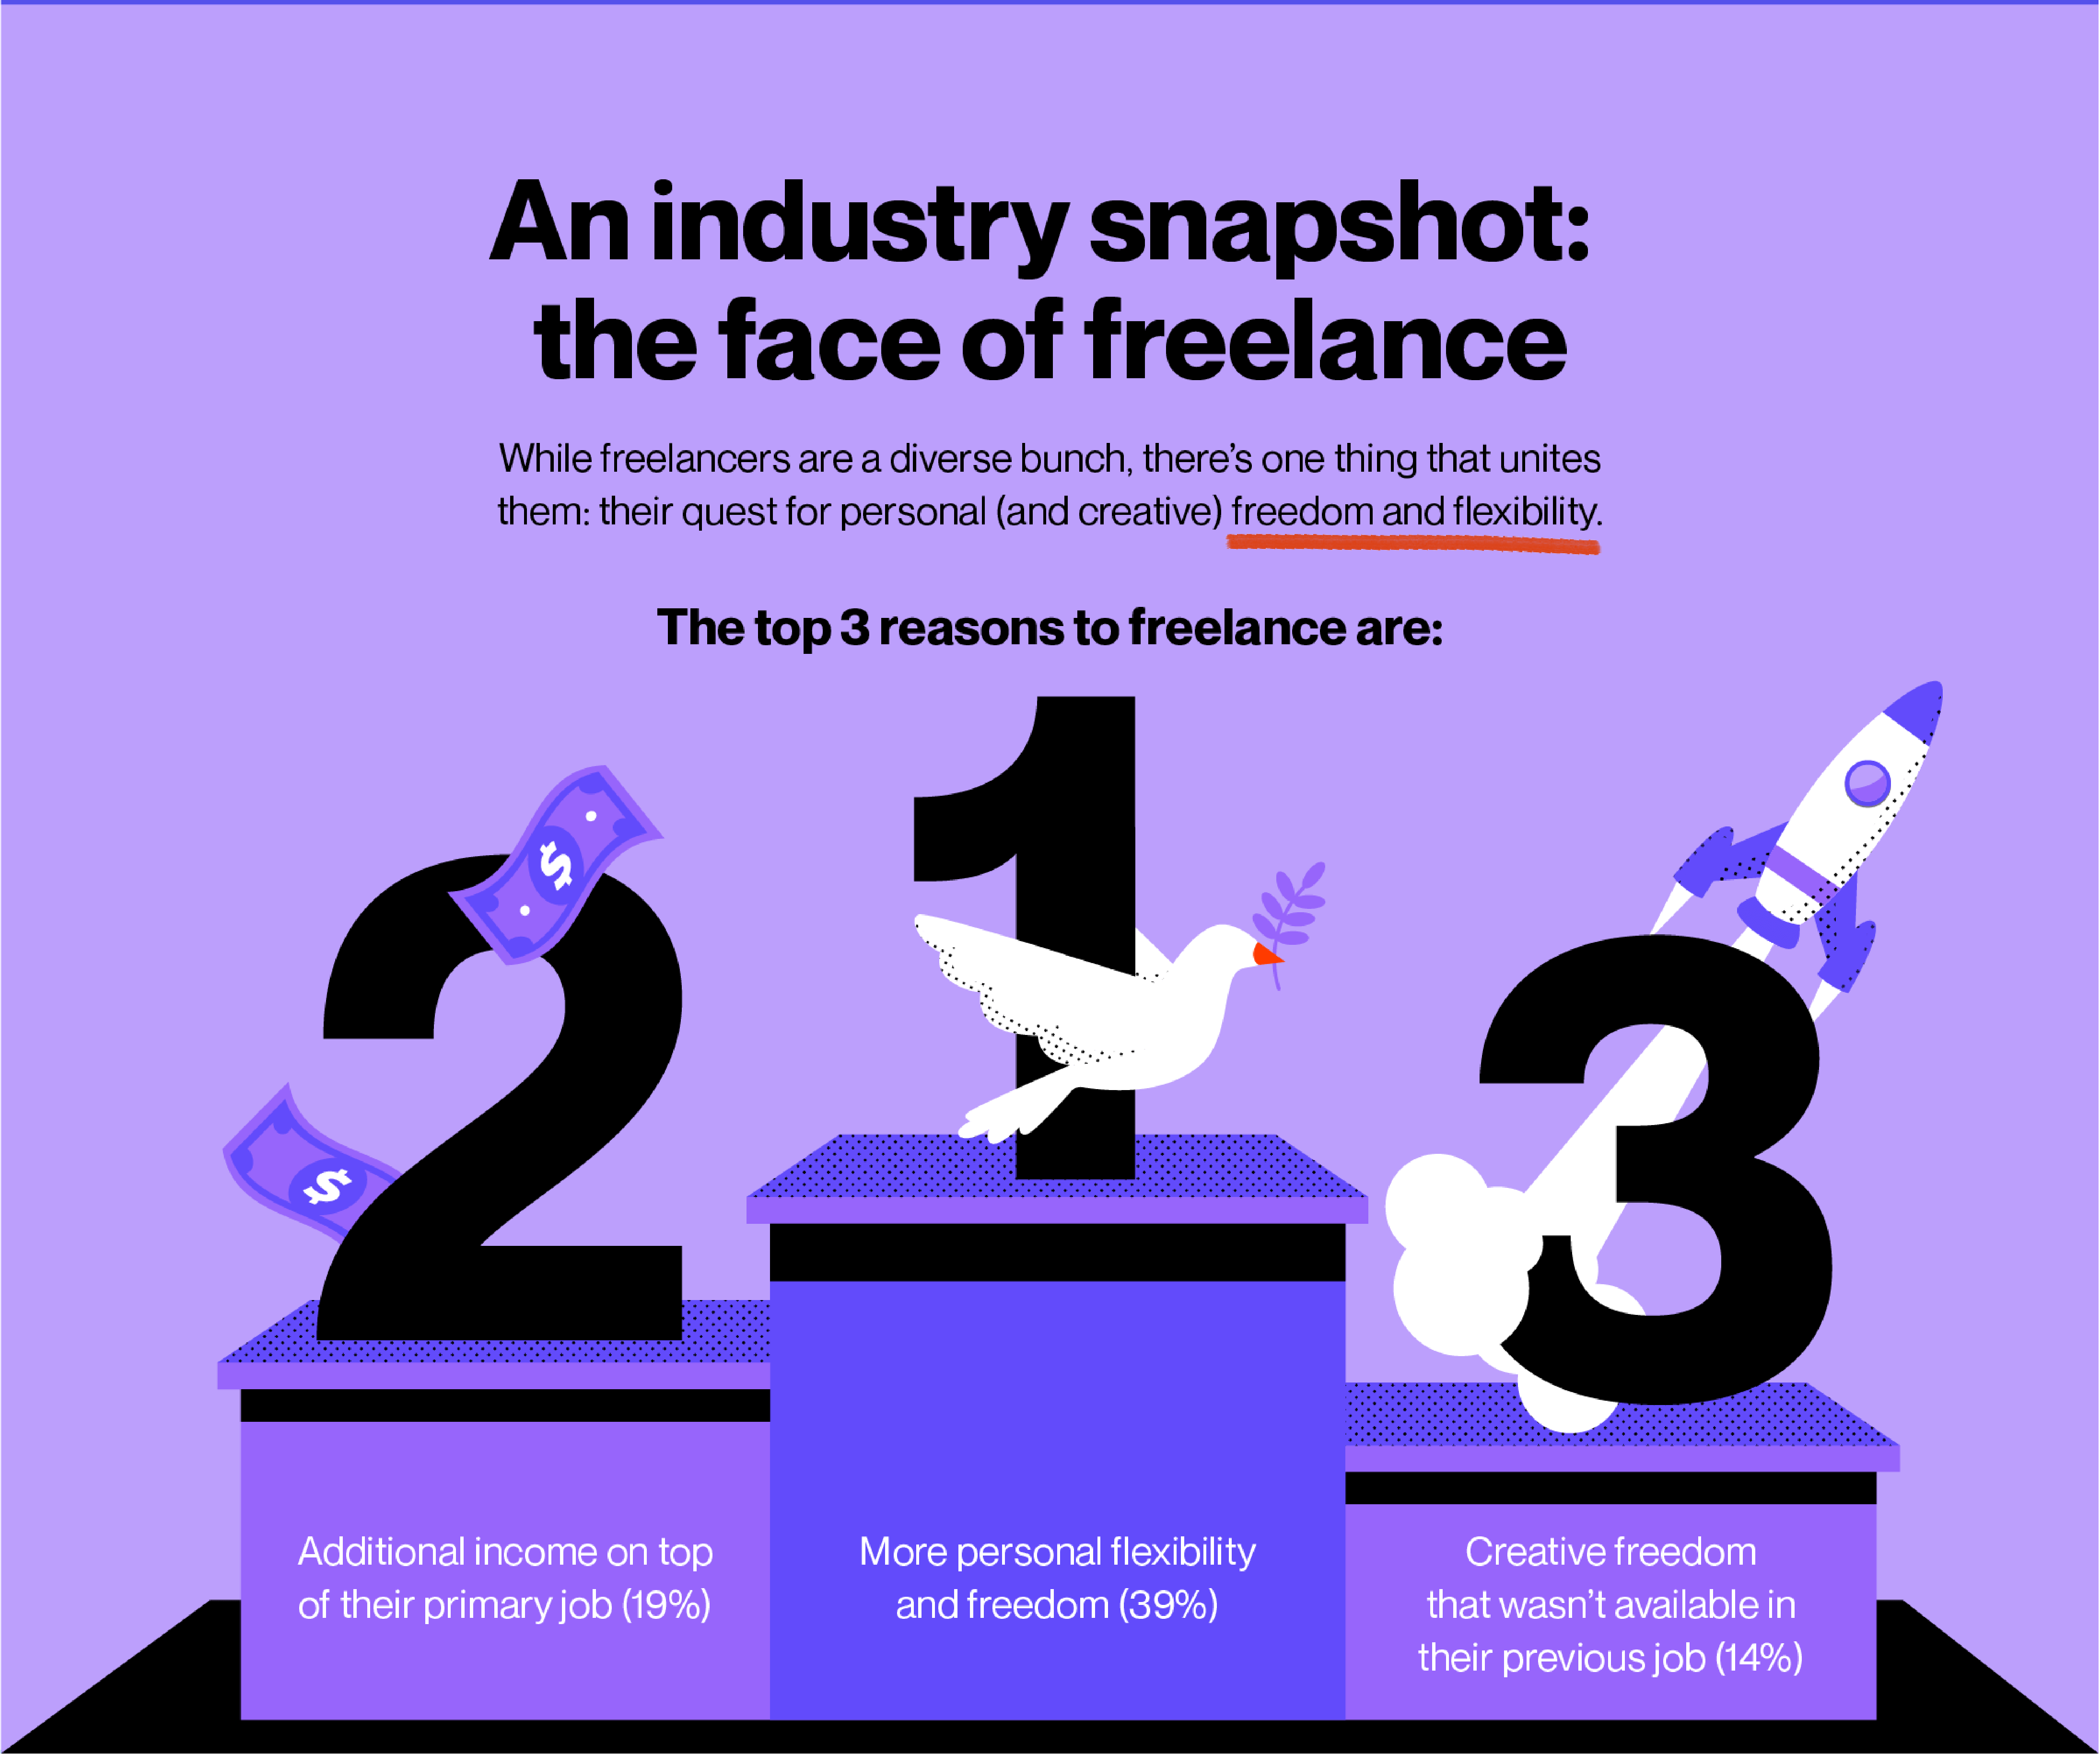 99designs - freelance industry snapshot